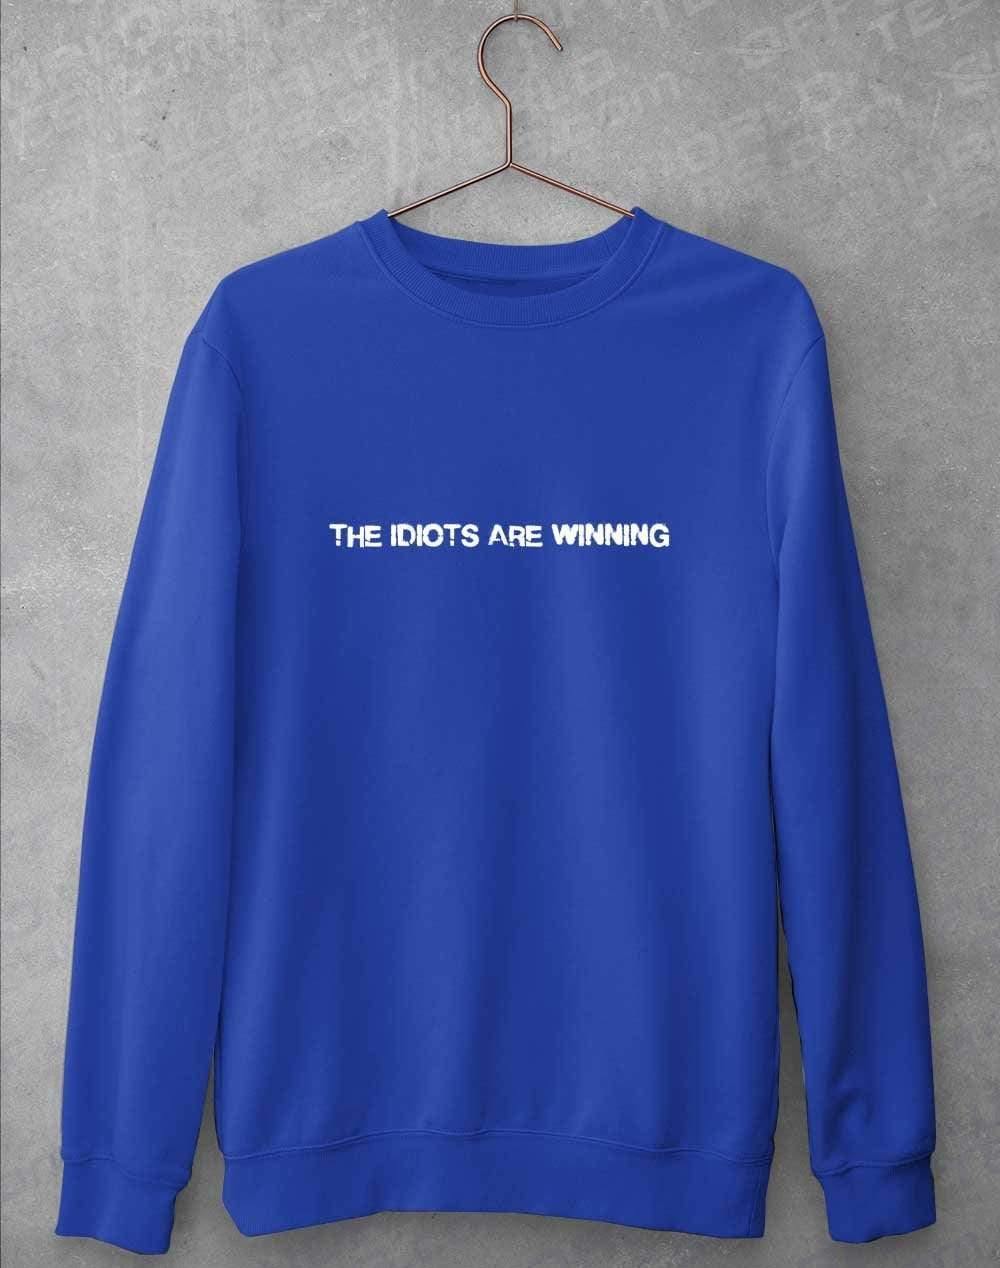 The Idiots Are Winning Sweatshirt S / Royal Blue  - Off World Tees